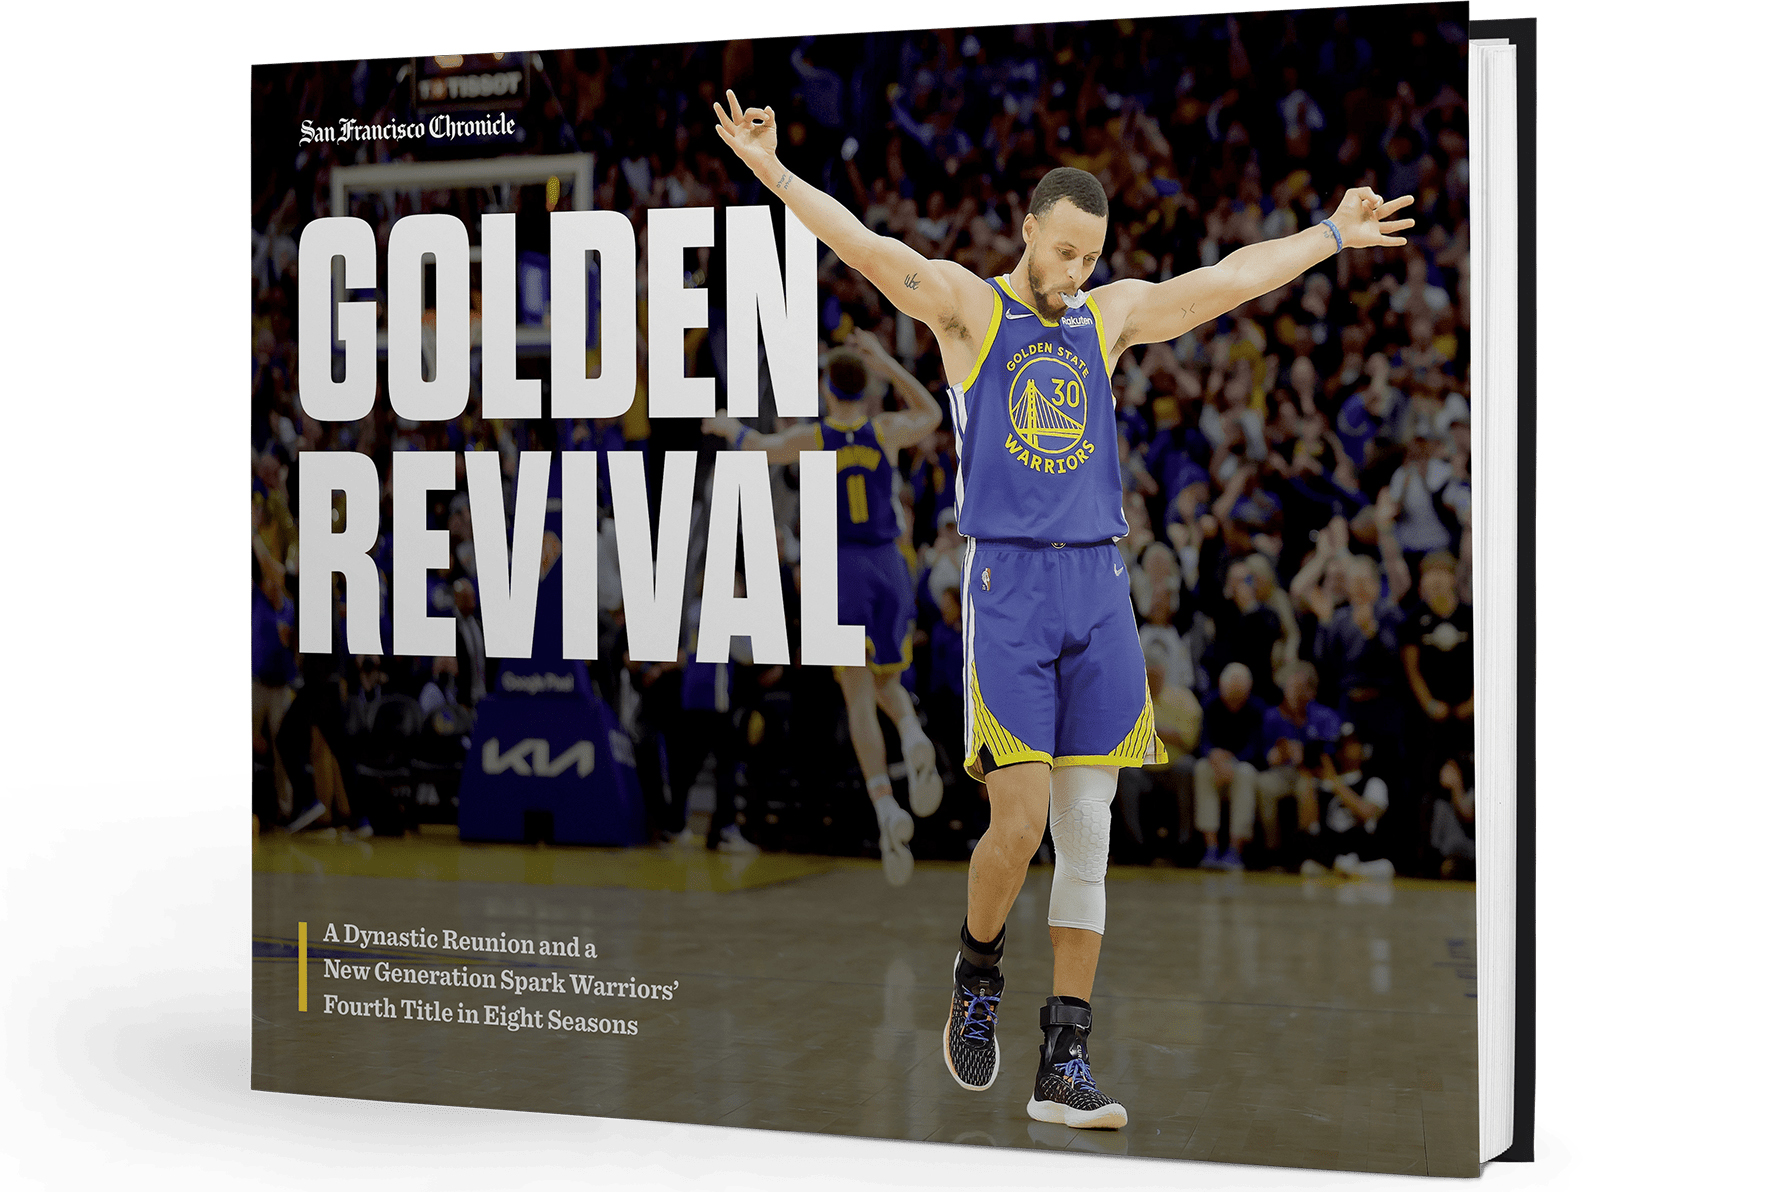 San Francisco book 'Golden Revival' celebrates Golden State Warriors' Championship